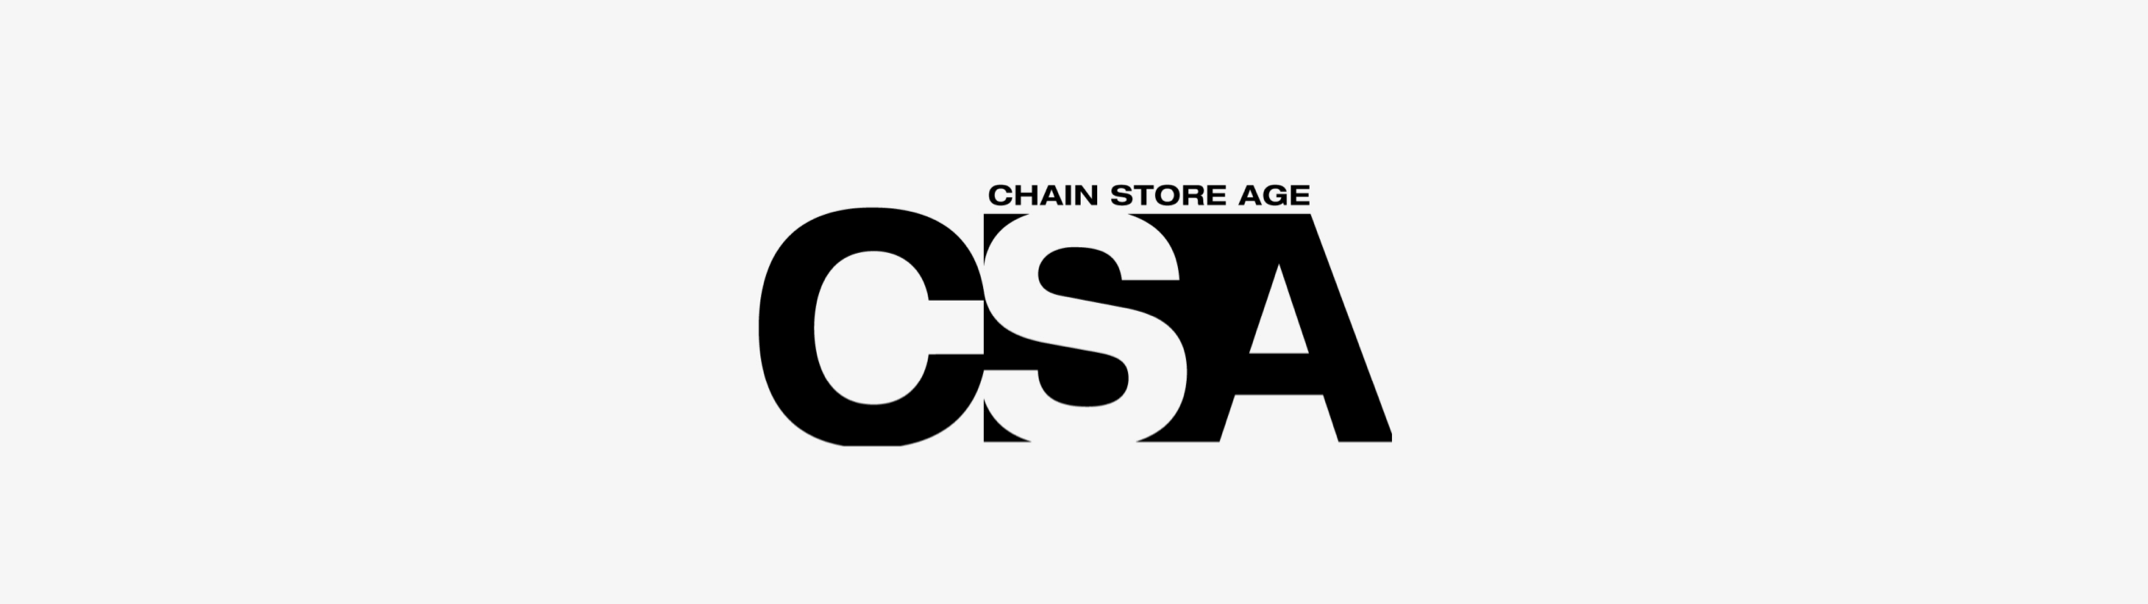 Logo de l'âge des chaînes de magasins